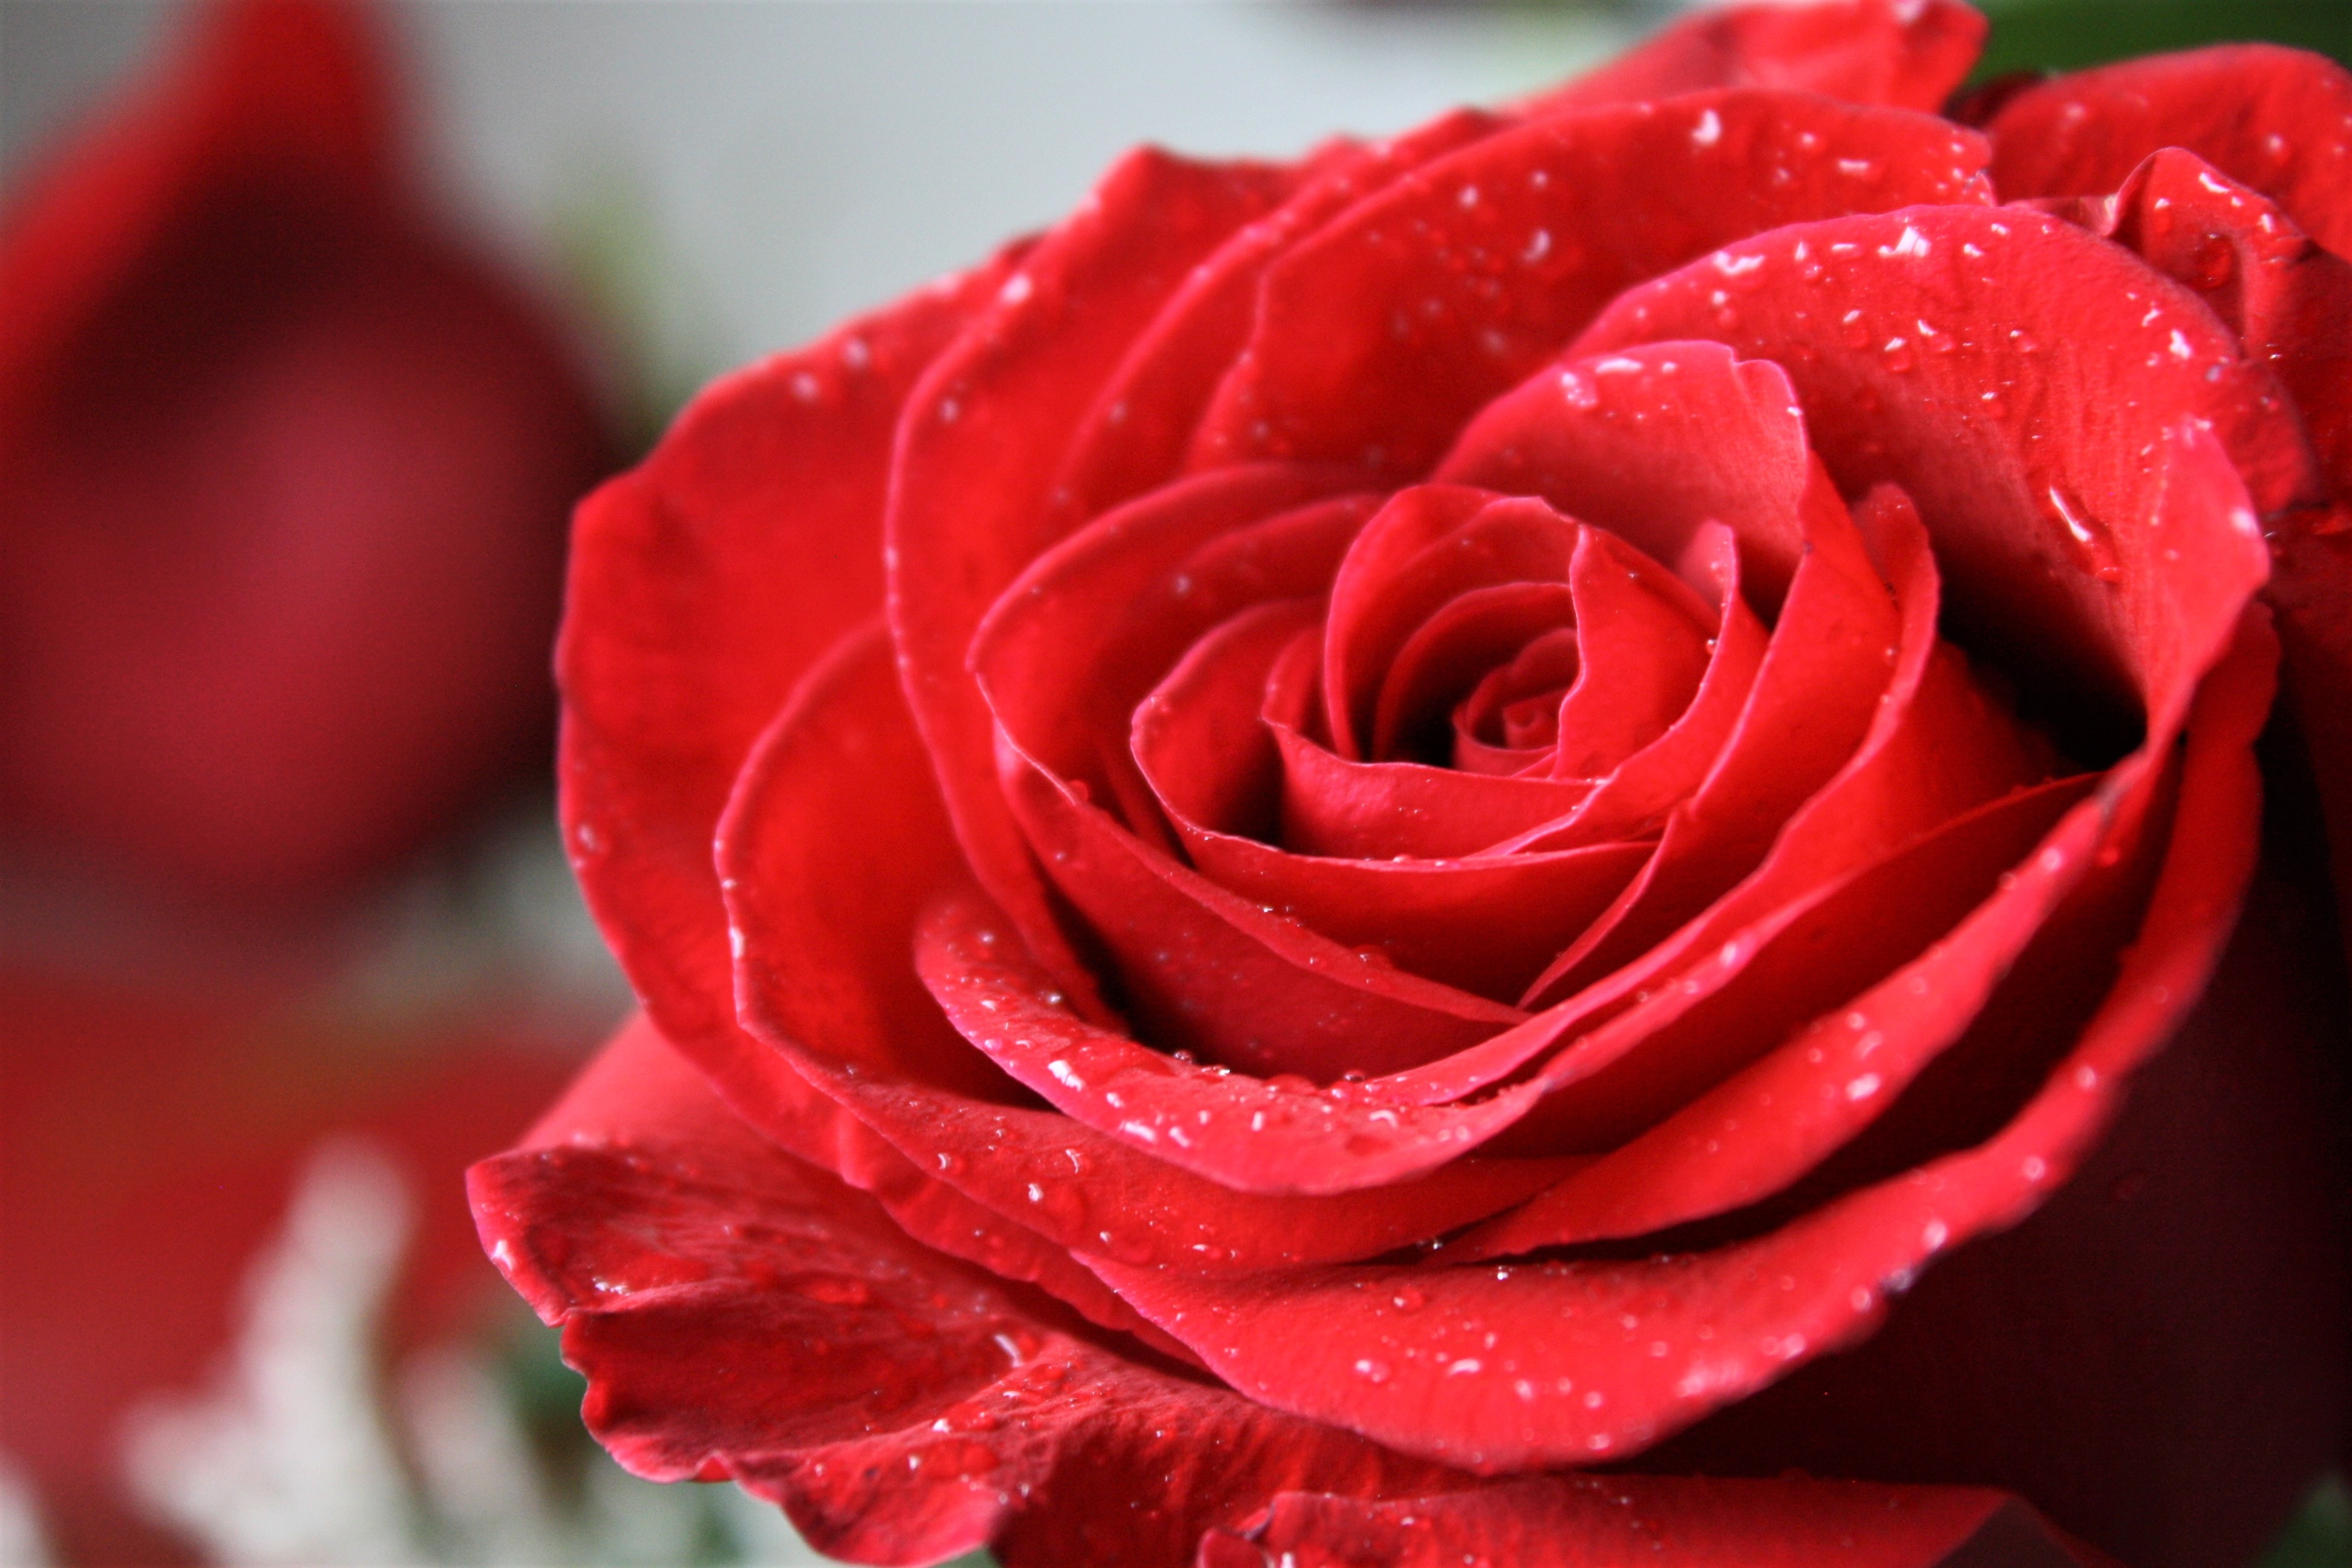 A red rose. | Source: Unsplash